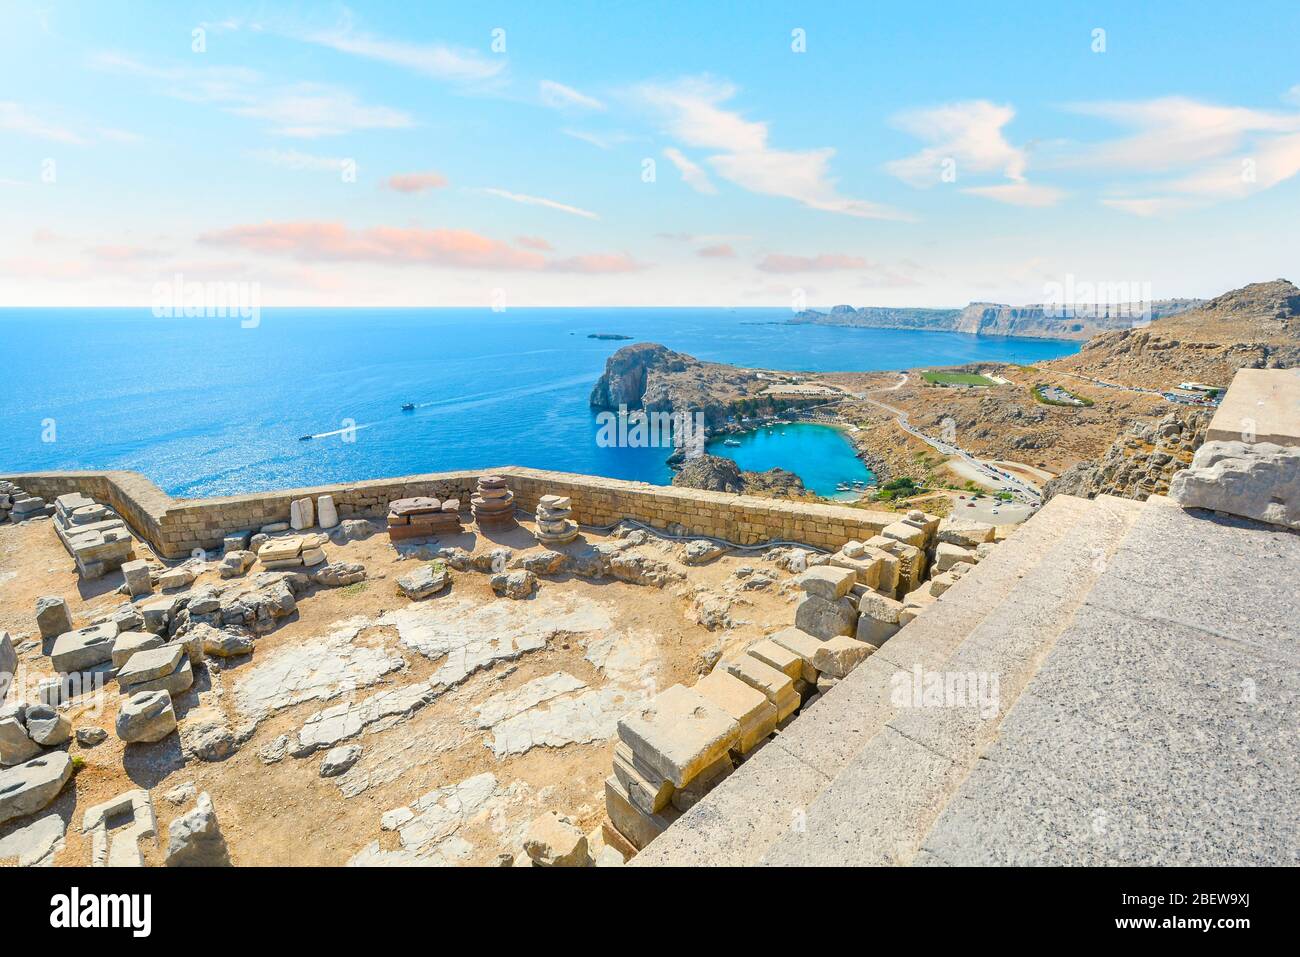 greece mediterranean sea view